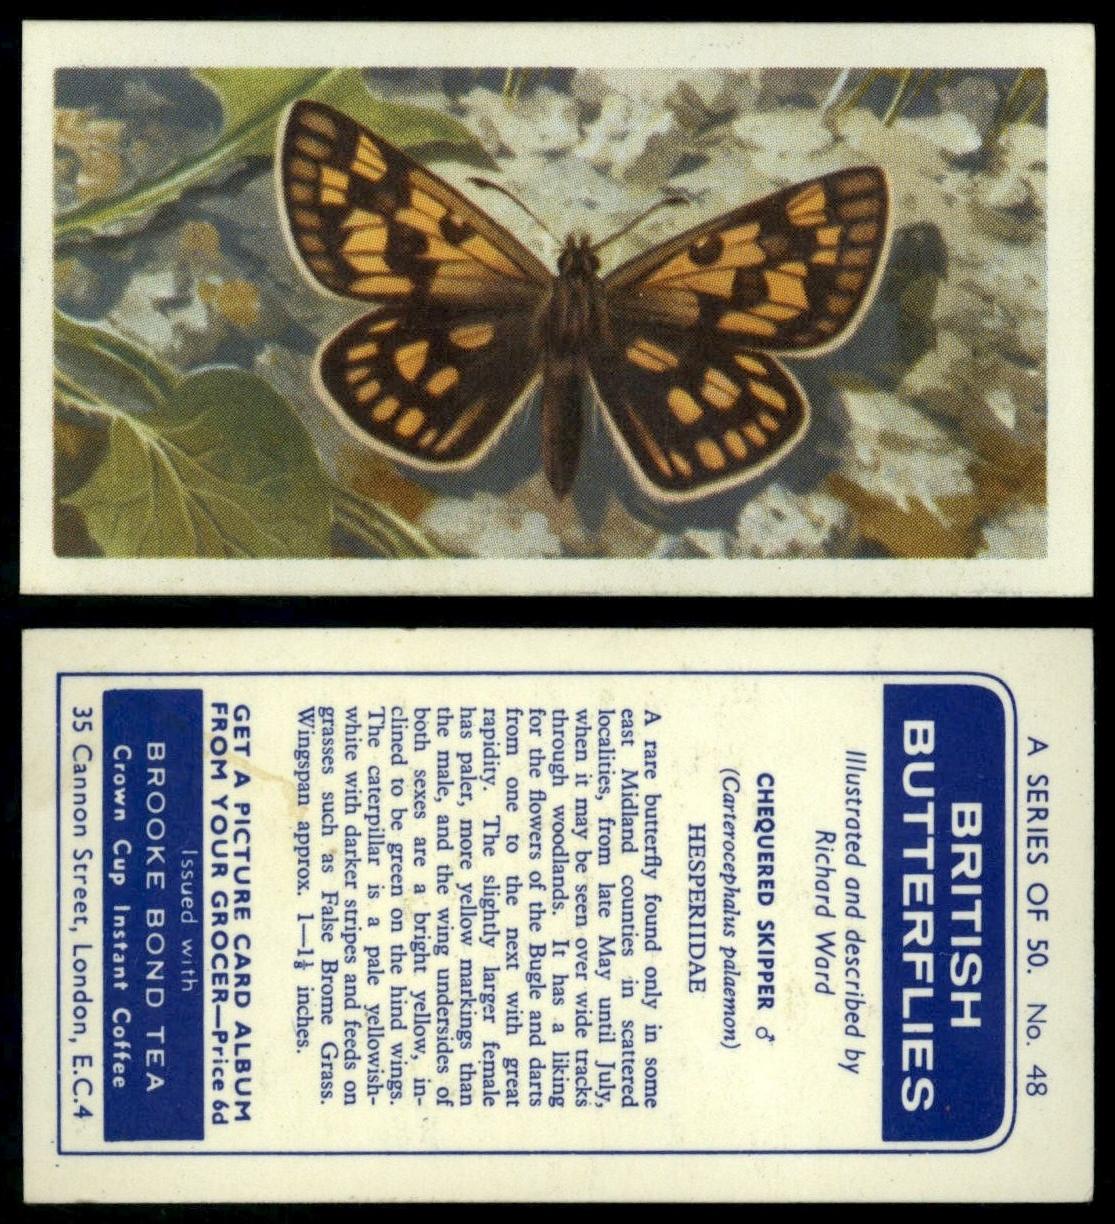 Chequered Skipper #48 British Butterflies 1963 Brooke Bond Card C1939 